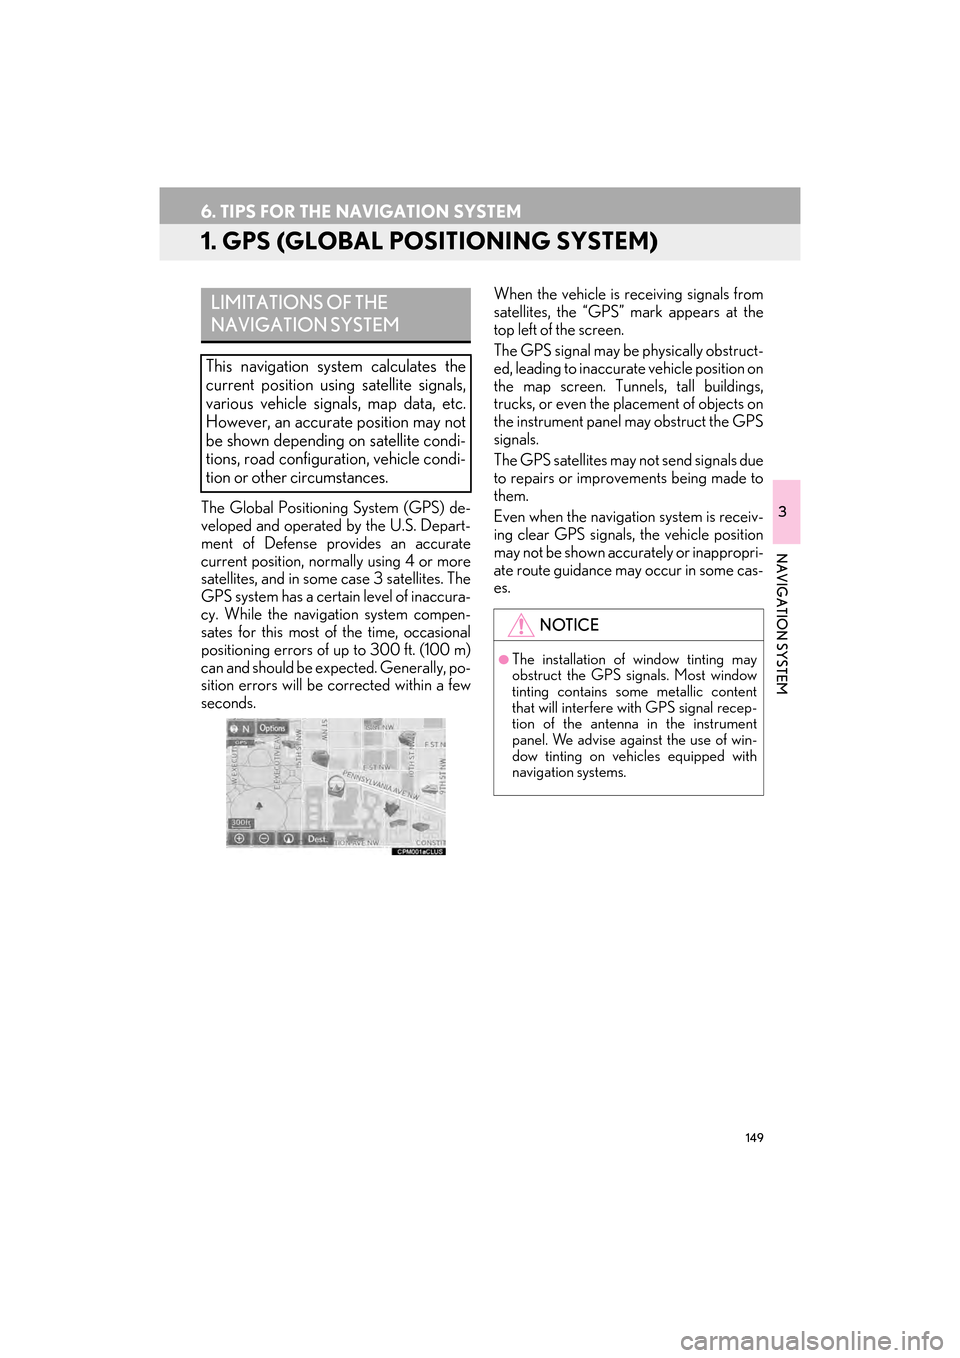 Lexus GX460 2014  Navigation Manual 149
GX_EMVN_OM60K84U_(U)13.07.02     11:50
3
NAVIGATION SYSTEM
6. TIPS FOR THE NAVIGATION SYSTEM
1. GPS (GLOBAL POSITIONING SYSTEM)
The Global Positioning System (GPS) de-
veloped and operated by the 